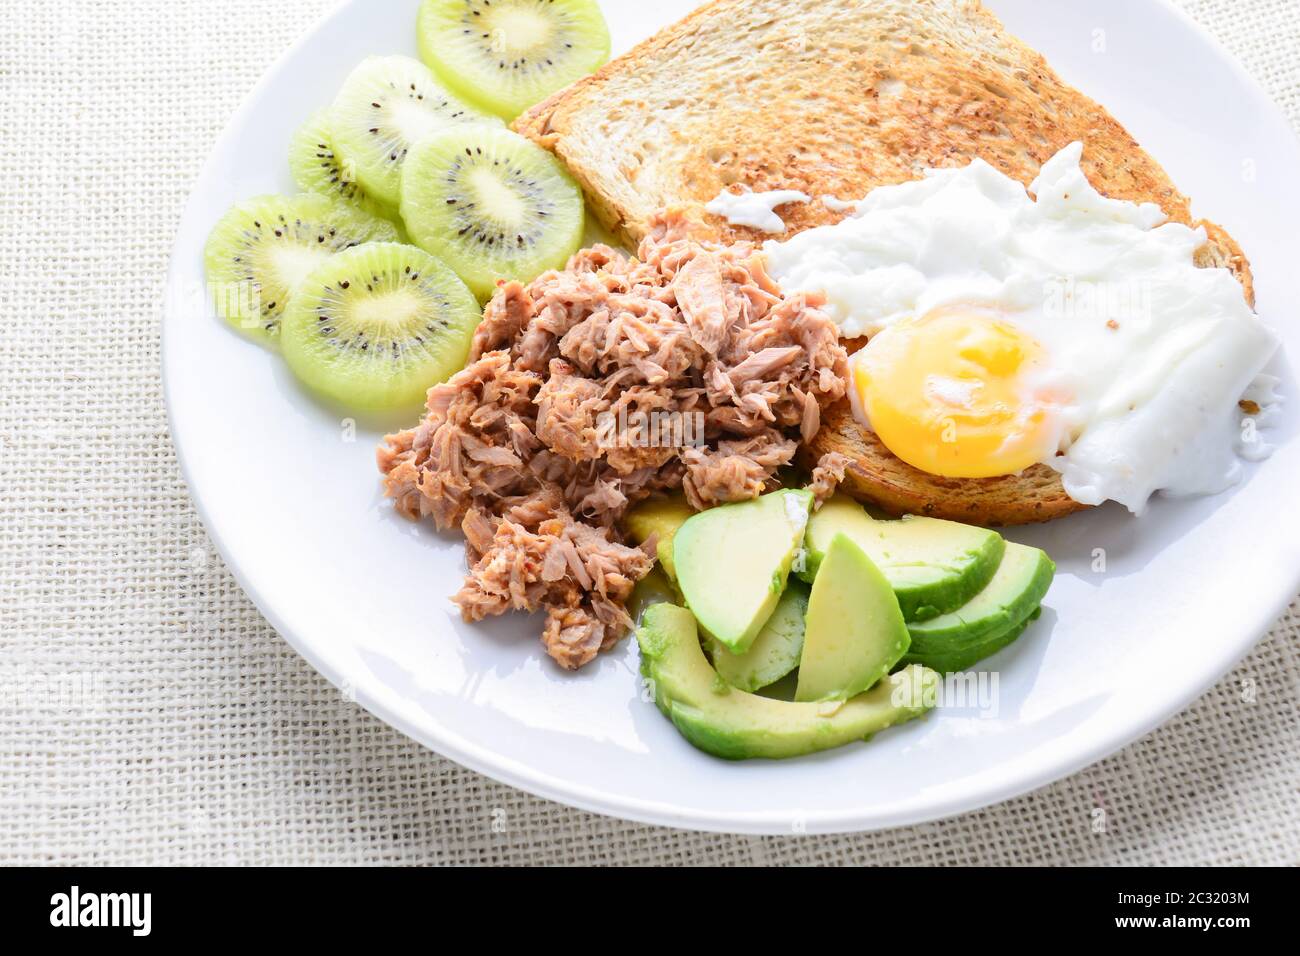 Modern style clean food, bread, egg, tuna salad, kiwi and avocado Stock Photo